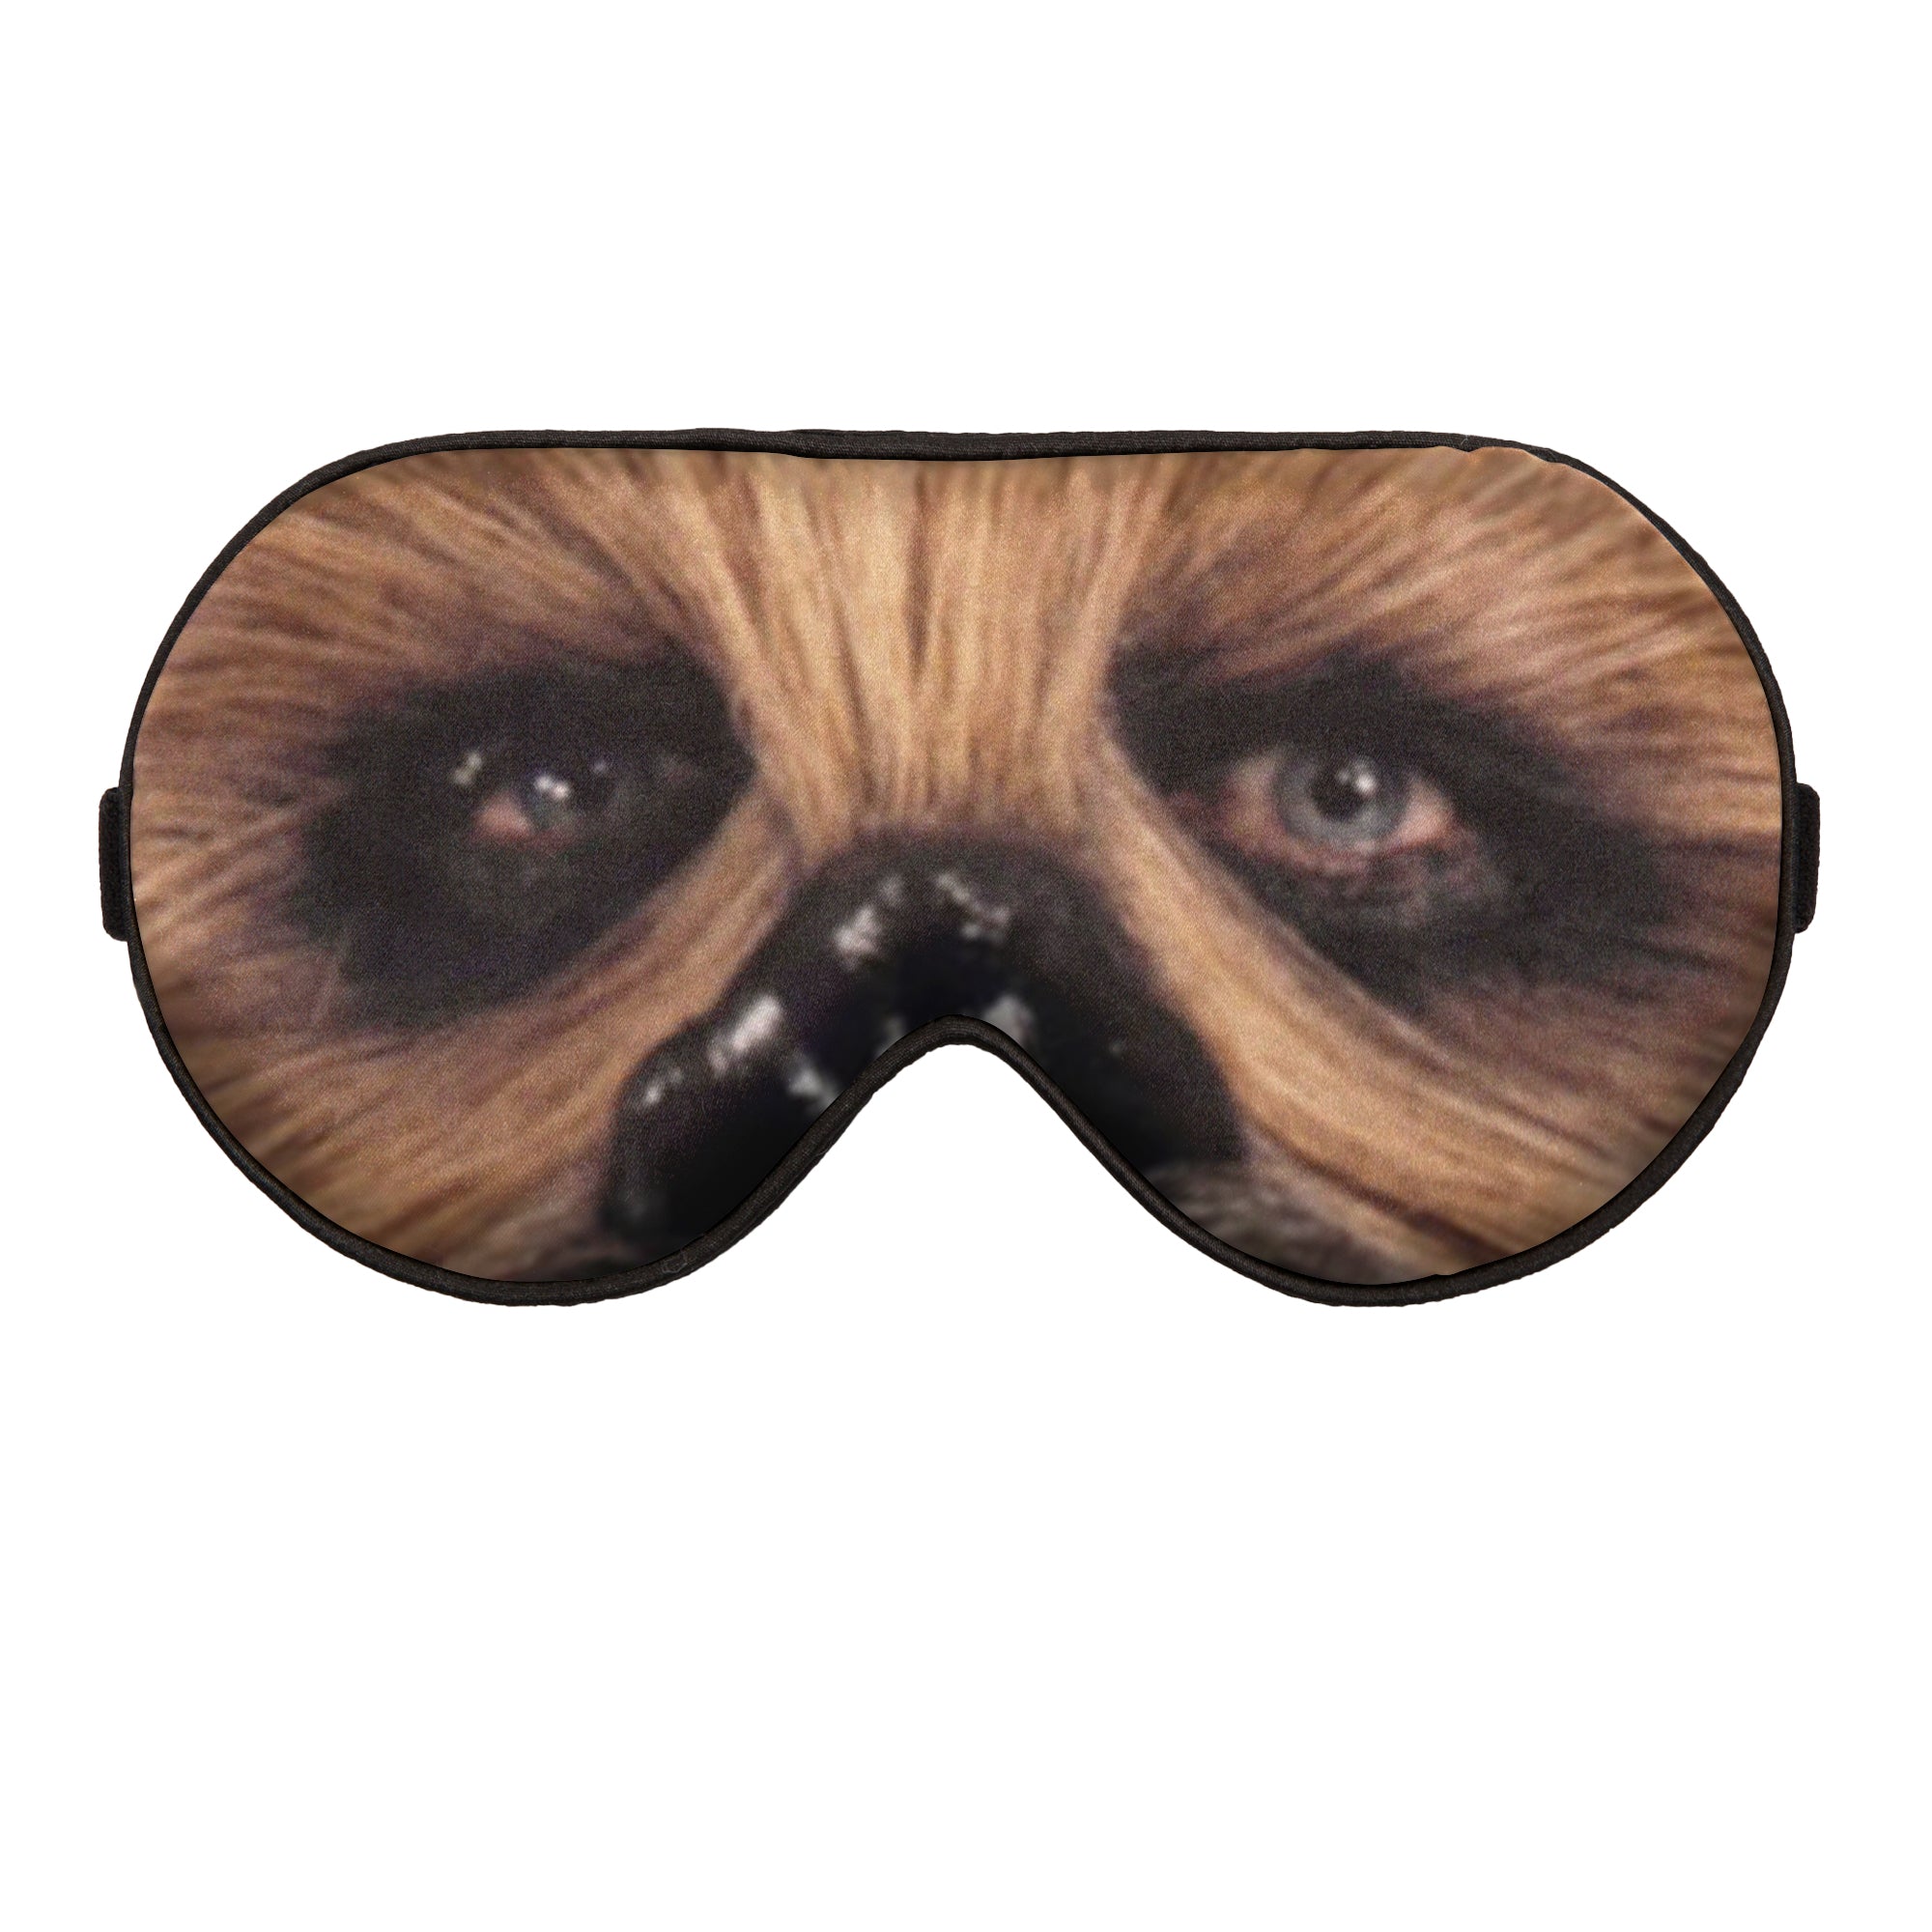 Chewbacca from Star Wars Sleep Mask